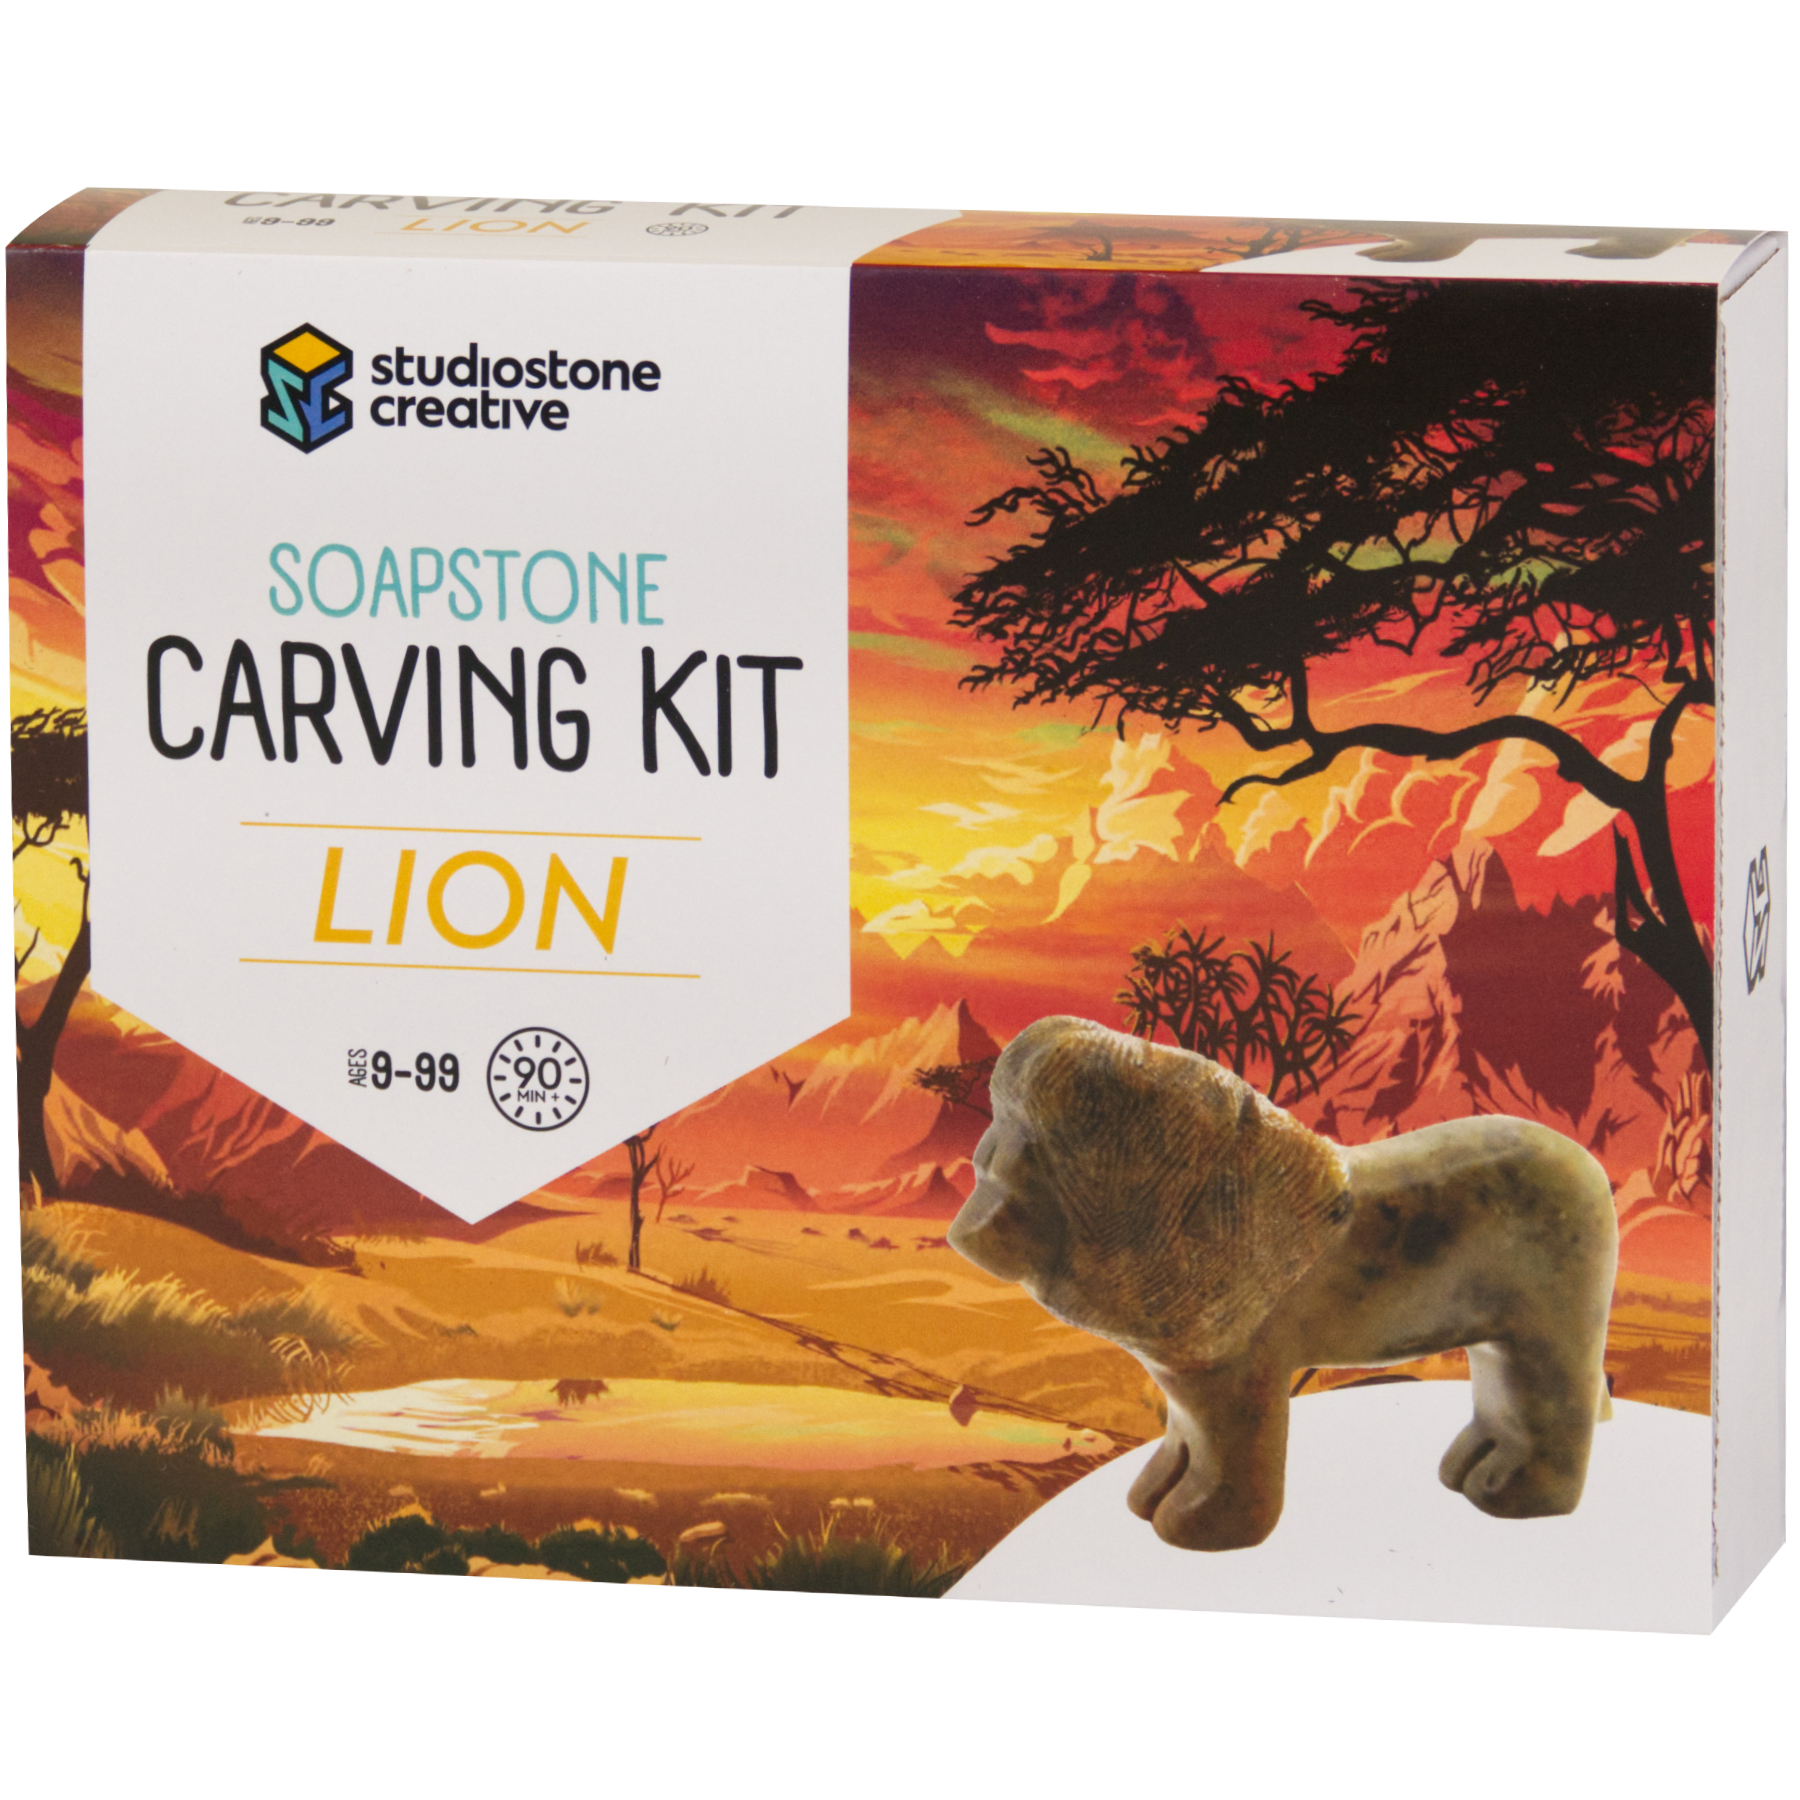 Studiostone Creative Lion Soapstone Carving Kit